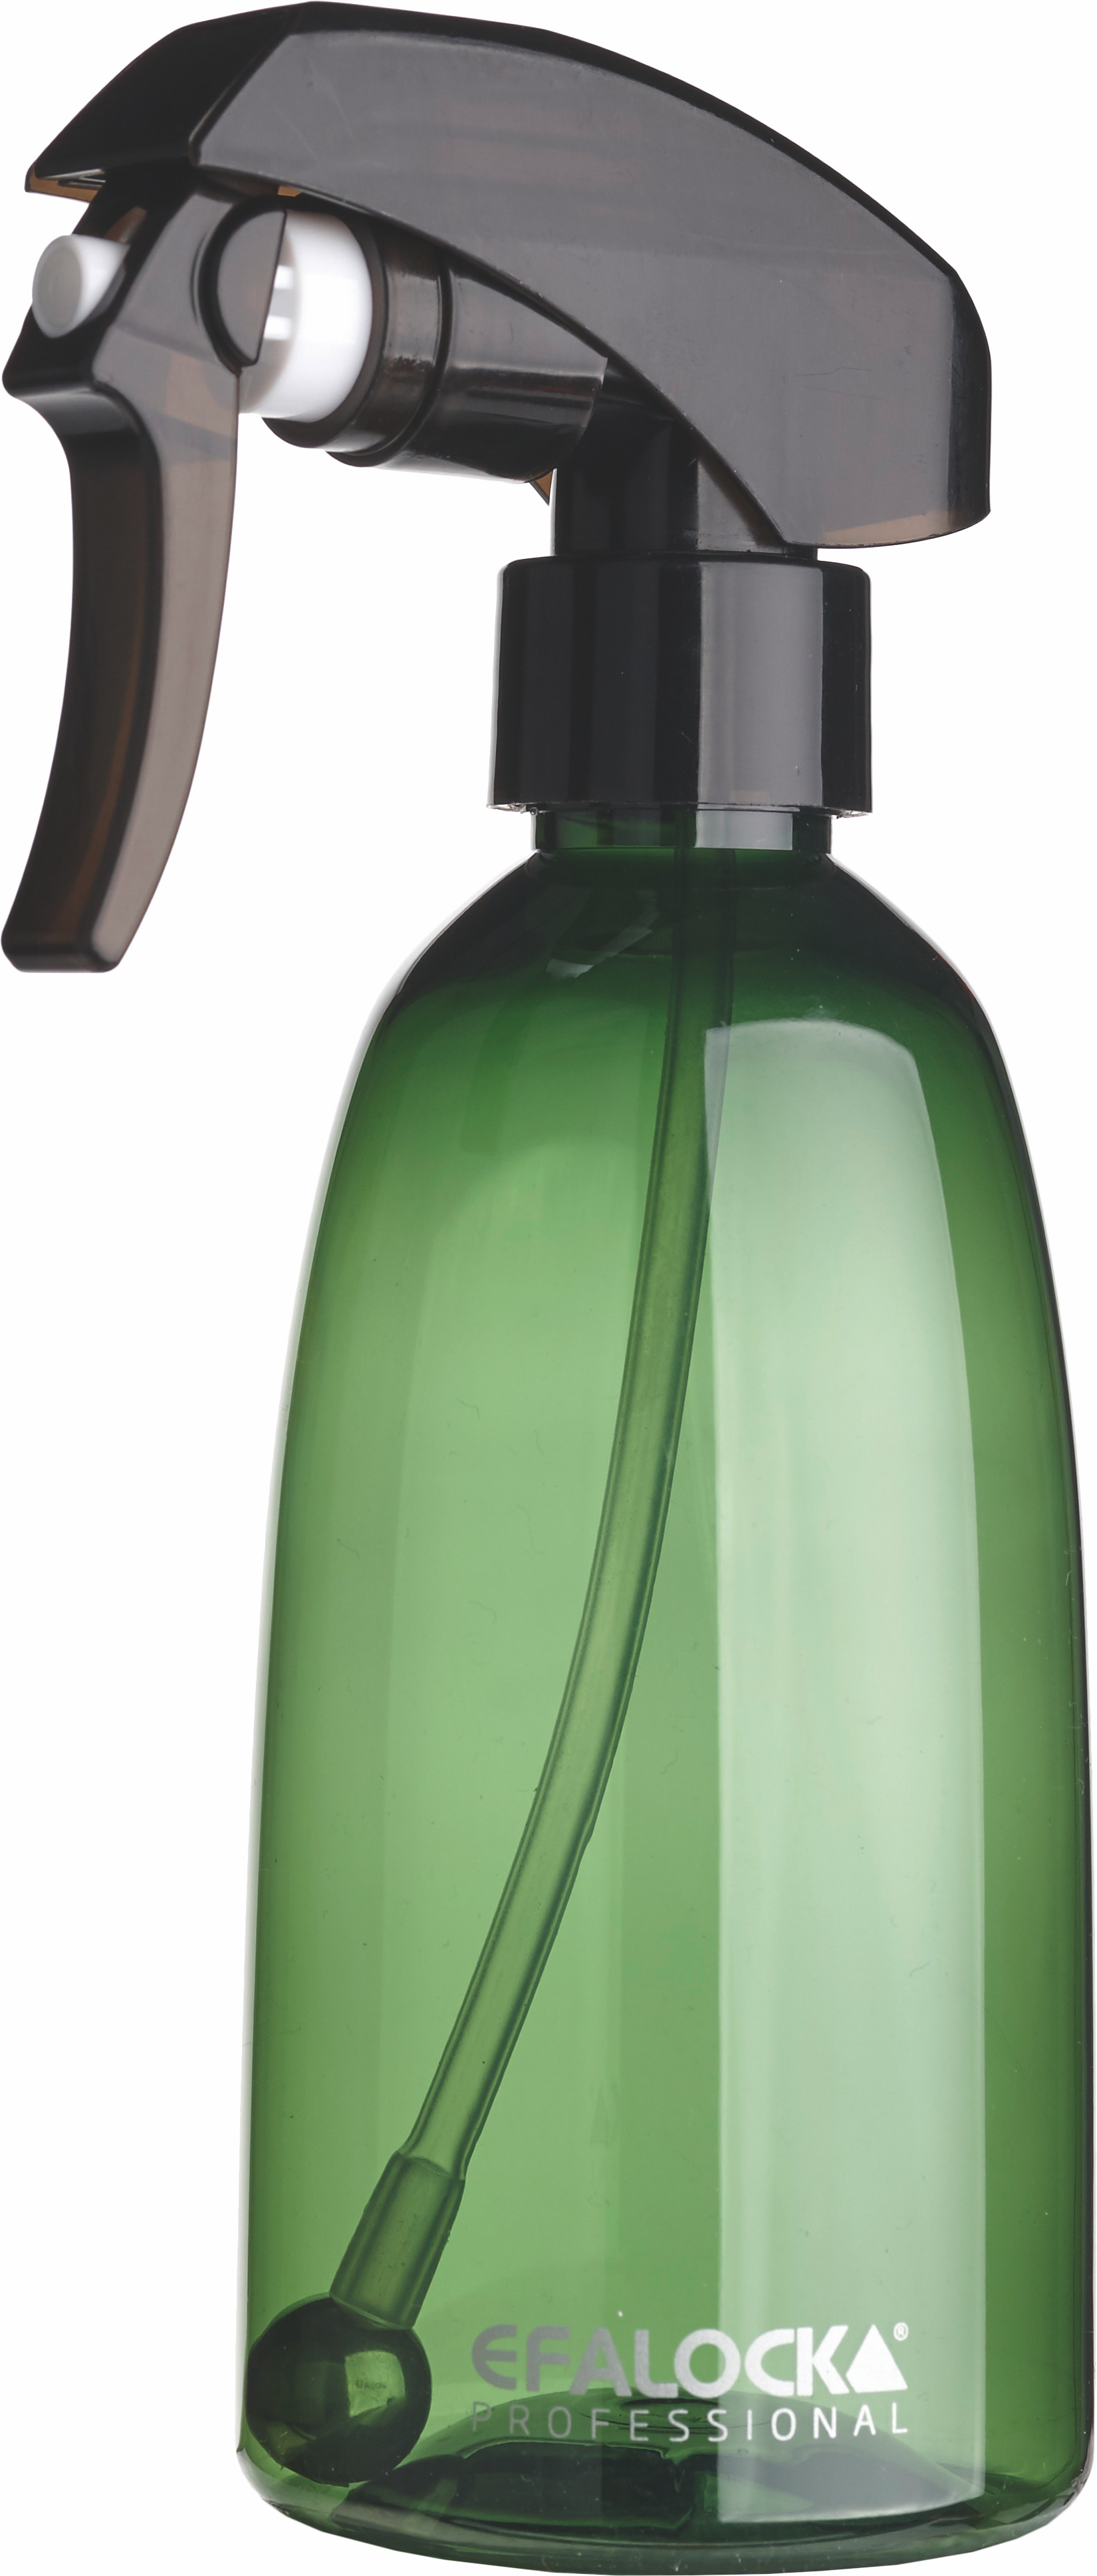 CLASSIC Spray bottle